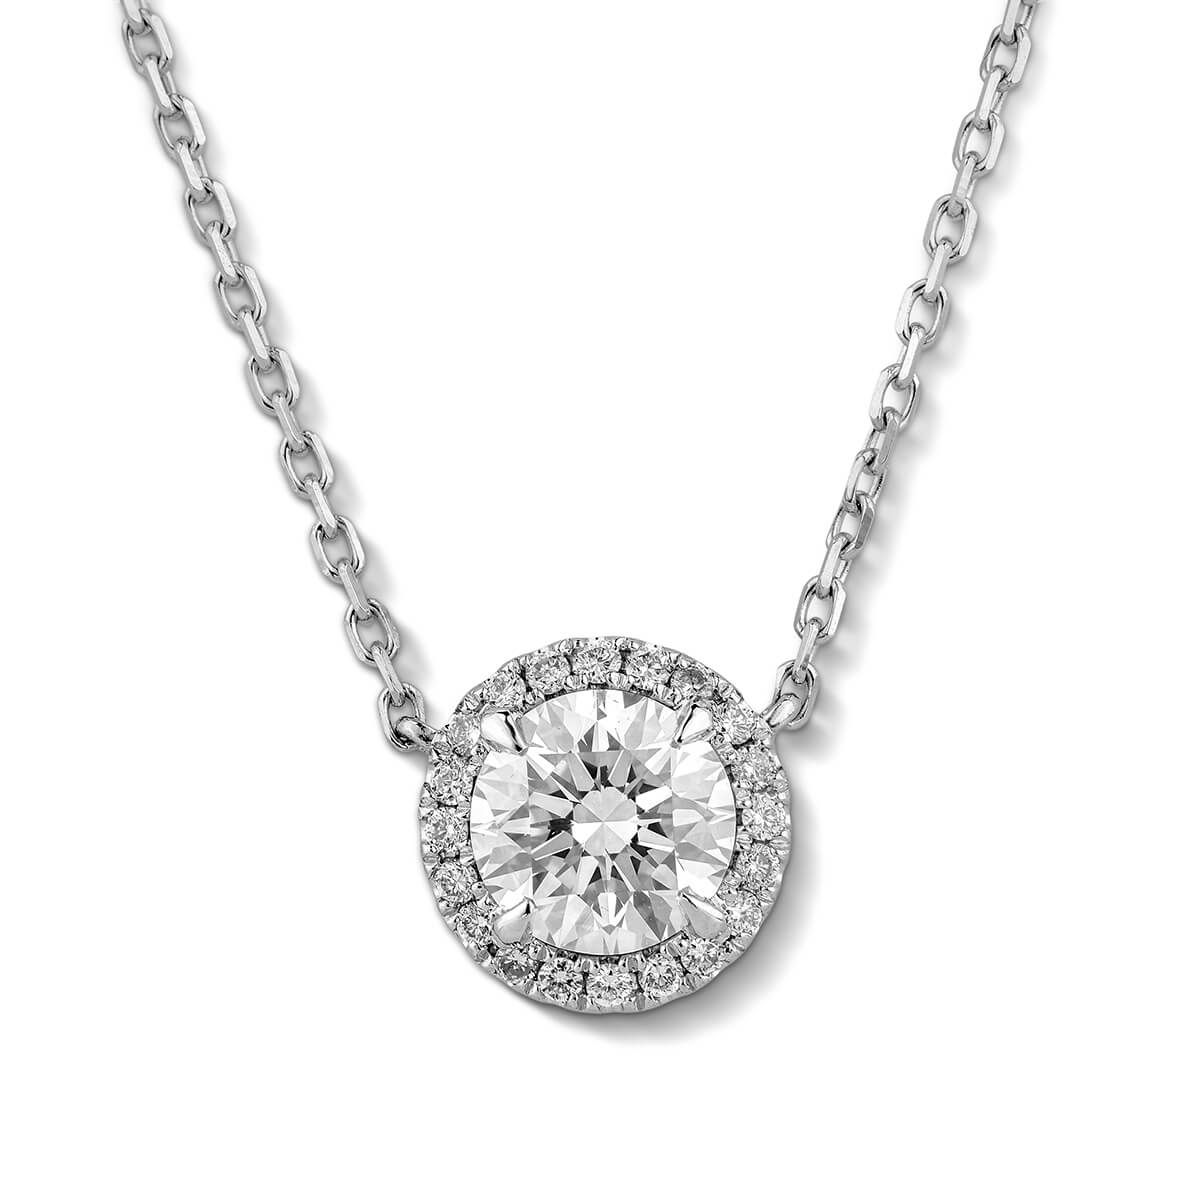  White Diamond Necklace, 1.69 Ct. TW, Round shape, GIA Certified, 6272454944